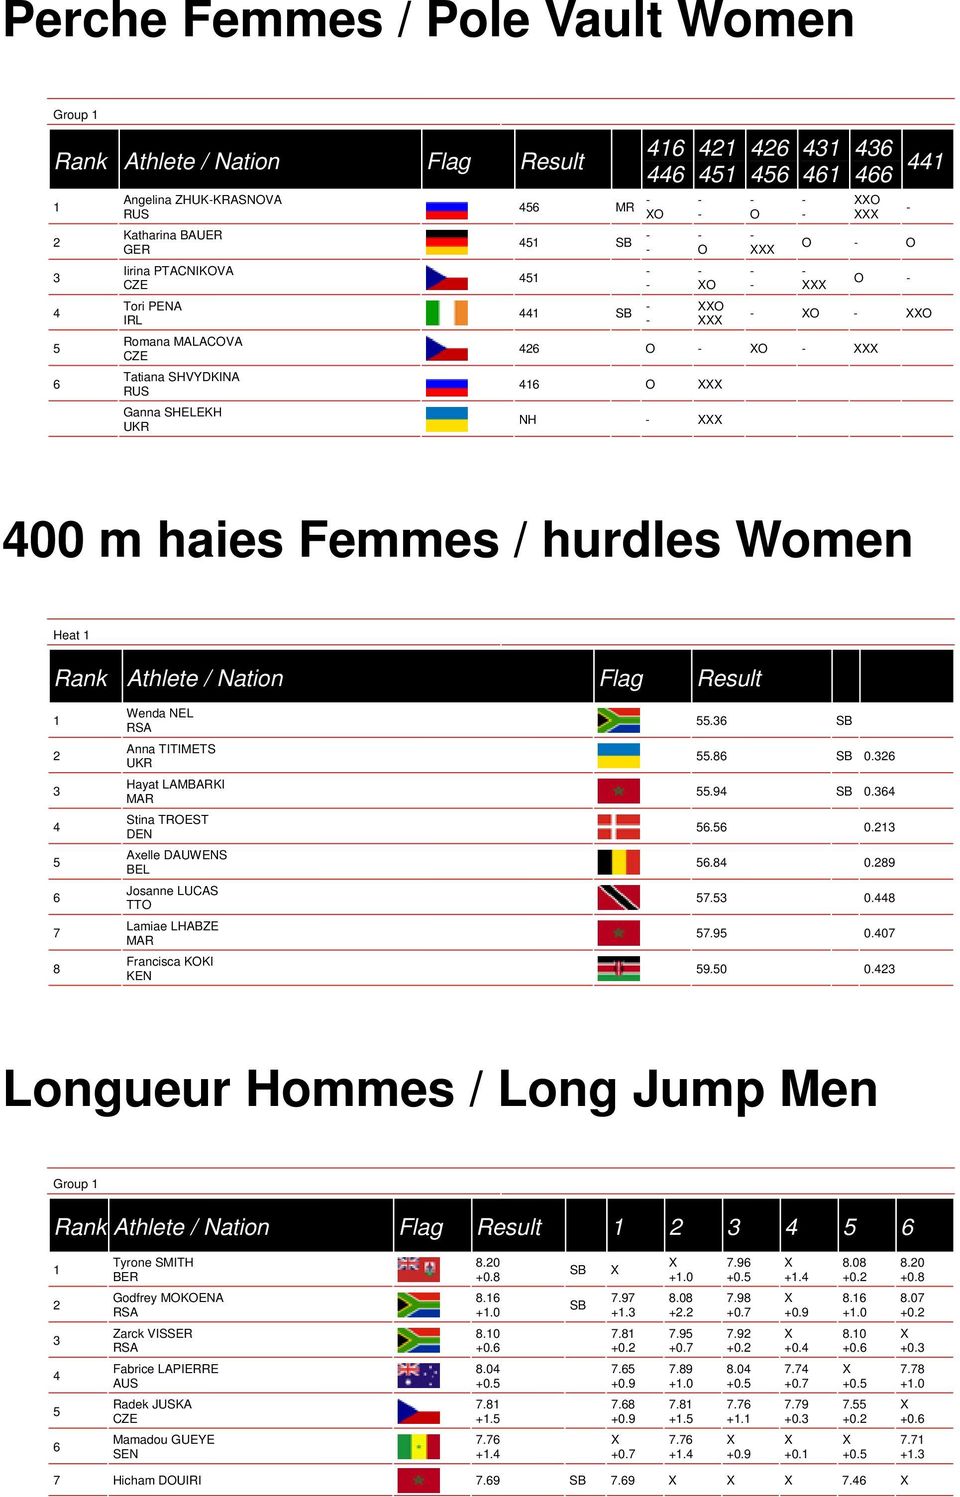 Longueur Hommes / Long Jump Men Group Tyrone SMITH BER Godfrey MOKOENA Zarck VISSER Fabrice LAPIERRE AUS Radek JUSKA Mamadou GUEYE SEN.0 +0.. +.0.0 +0..0 +0.. +.. +. SB SB. +.. +0.. +0.. +0. +0. +.0.0 +.. +0.. +.0. +.. +.. +0.. +0.. +0..0 +0.. +. +0. +. +0. +0.. +0.. +0. +0..0 +0.. +.0.0 +0. +0.. +0. +0..0 +0..0 +0. +0.. +.0 +0.. +. Hicham DOUIRI.